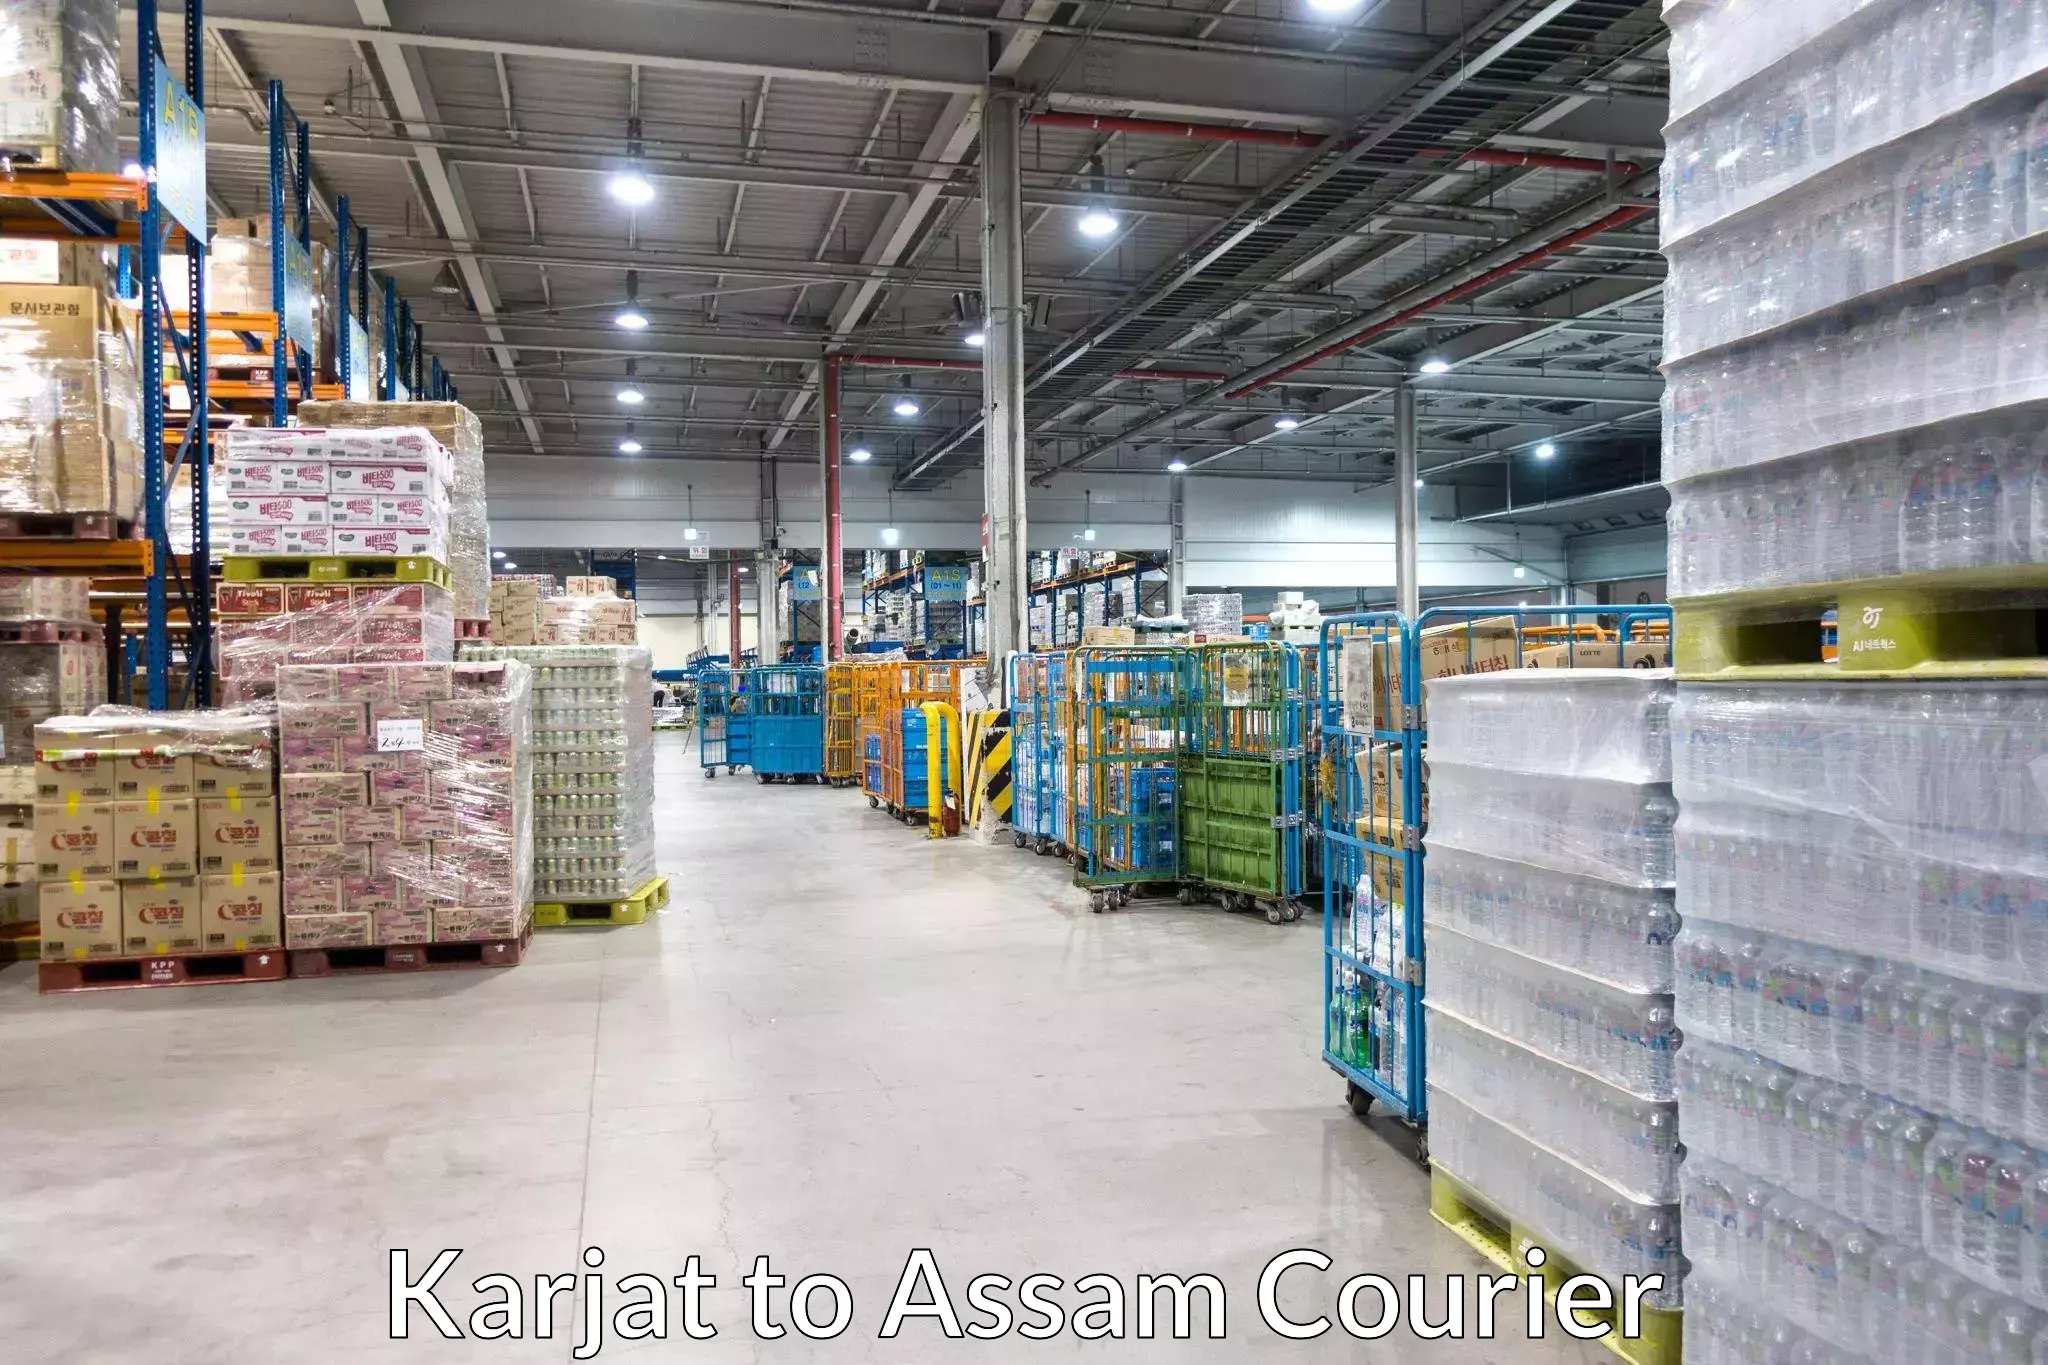 Subscription-based courier Karjat to Assam